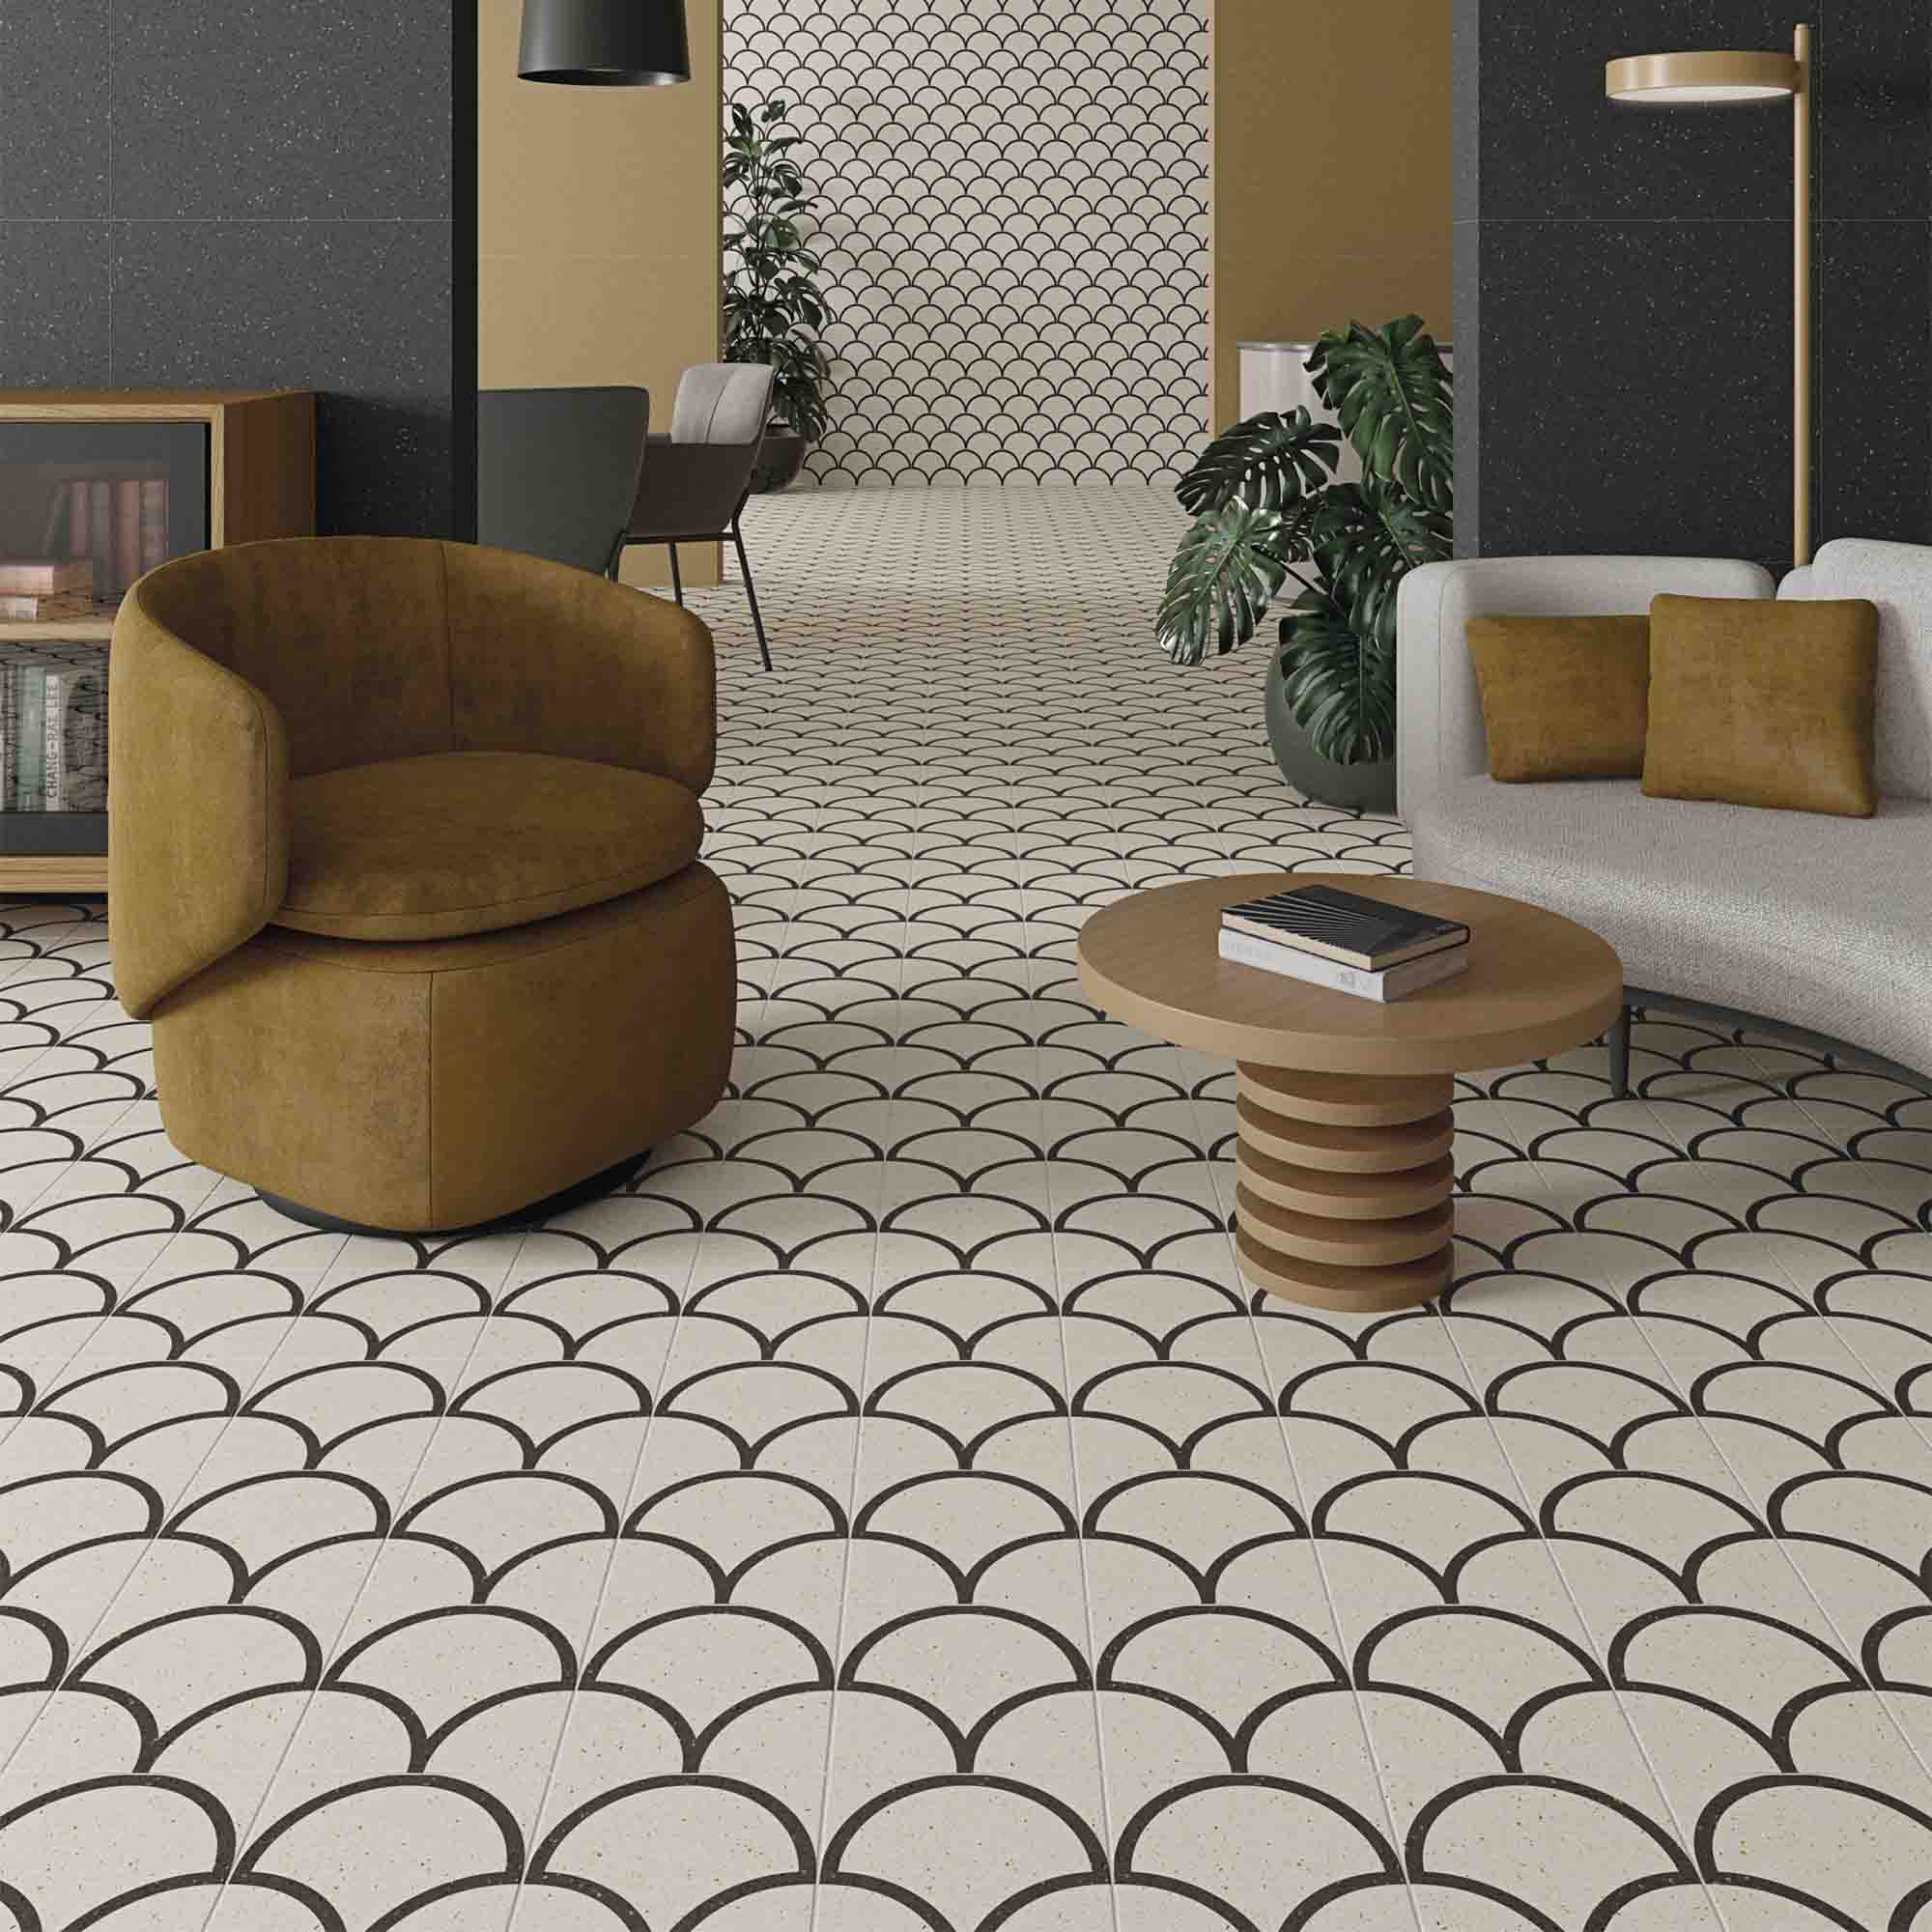 vives quetta pattern terrazzo ceramic tile matt 20x20cm